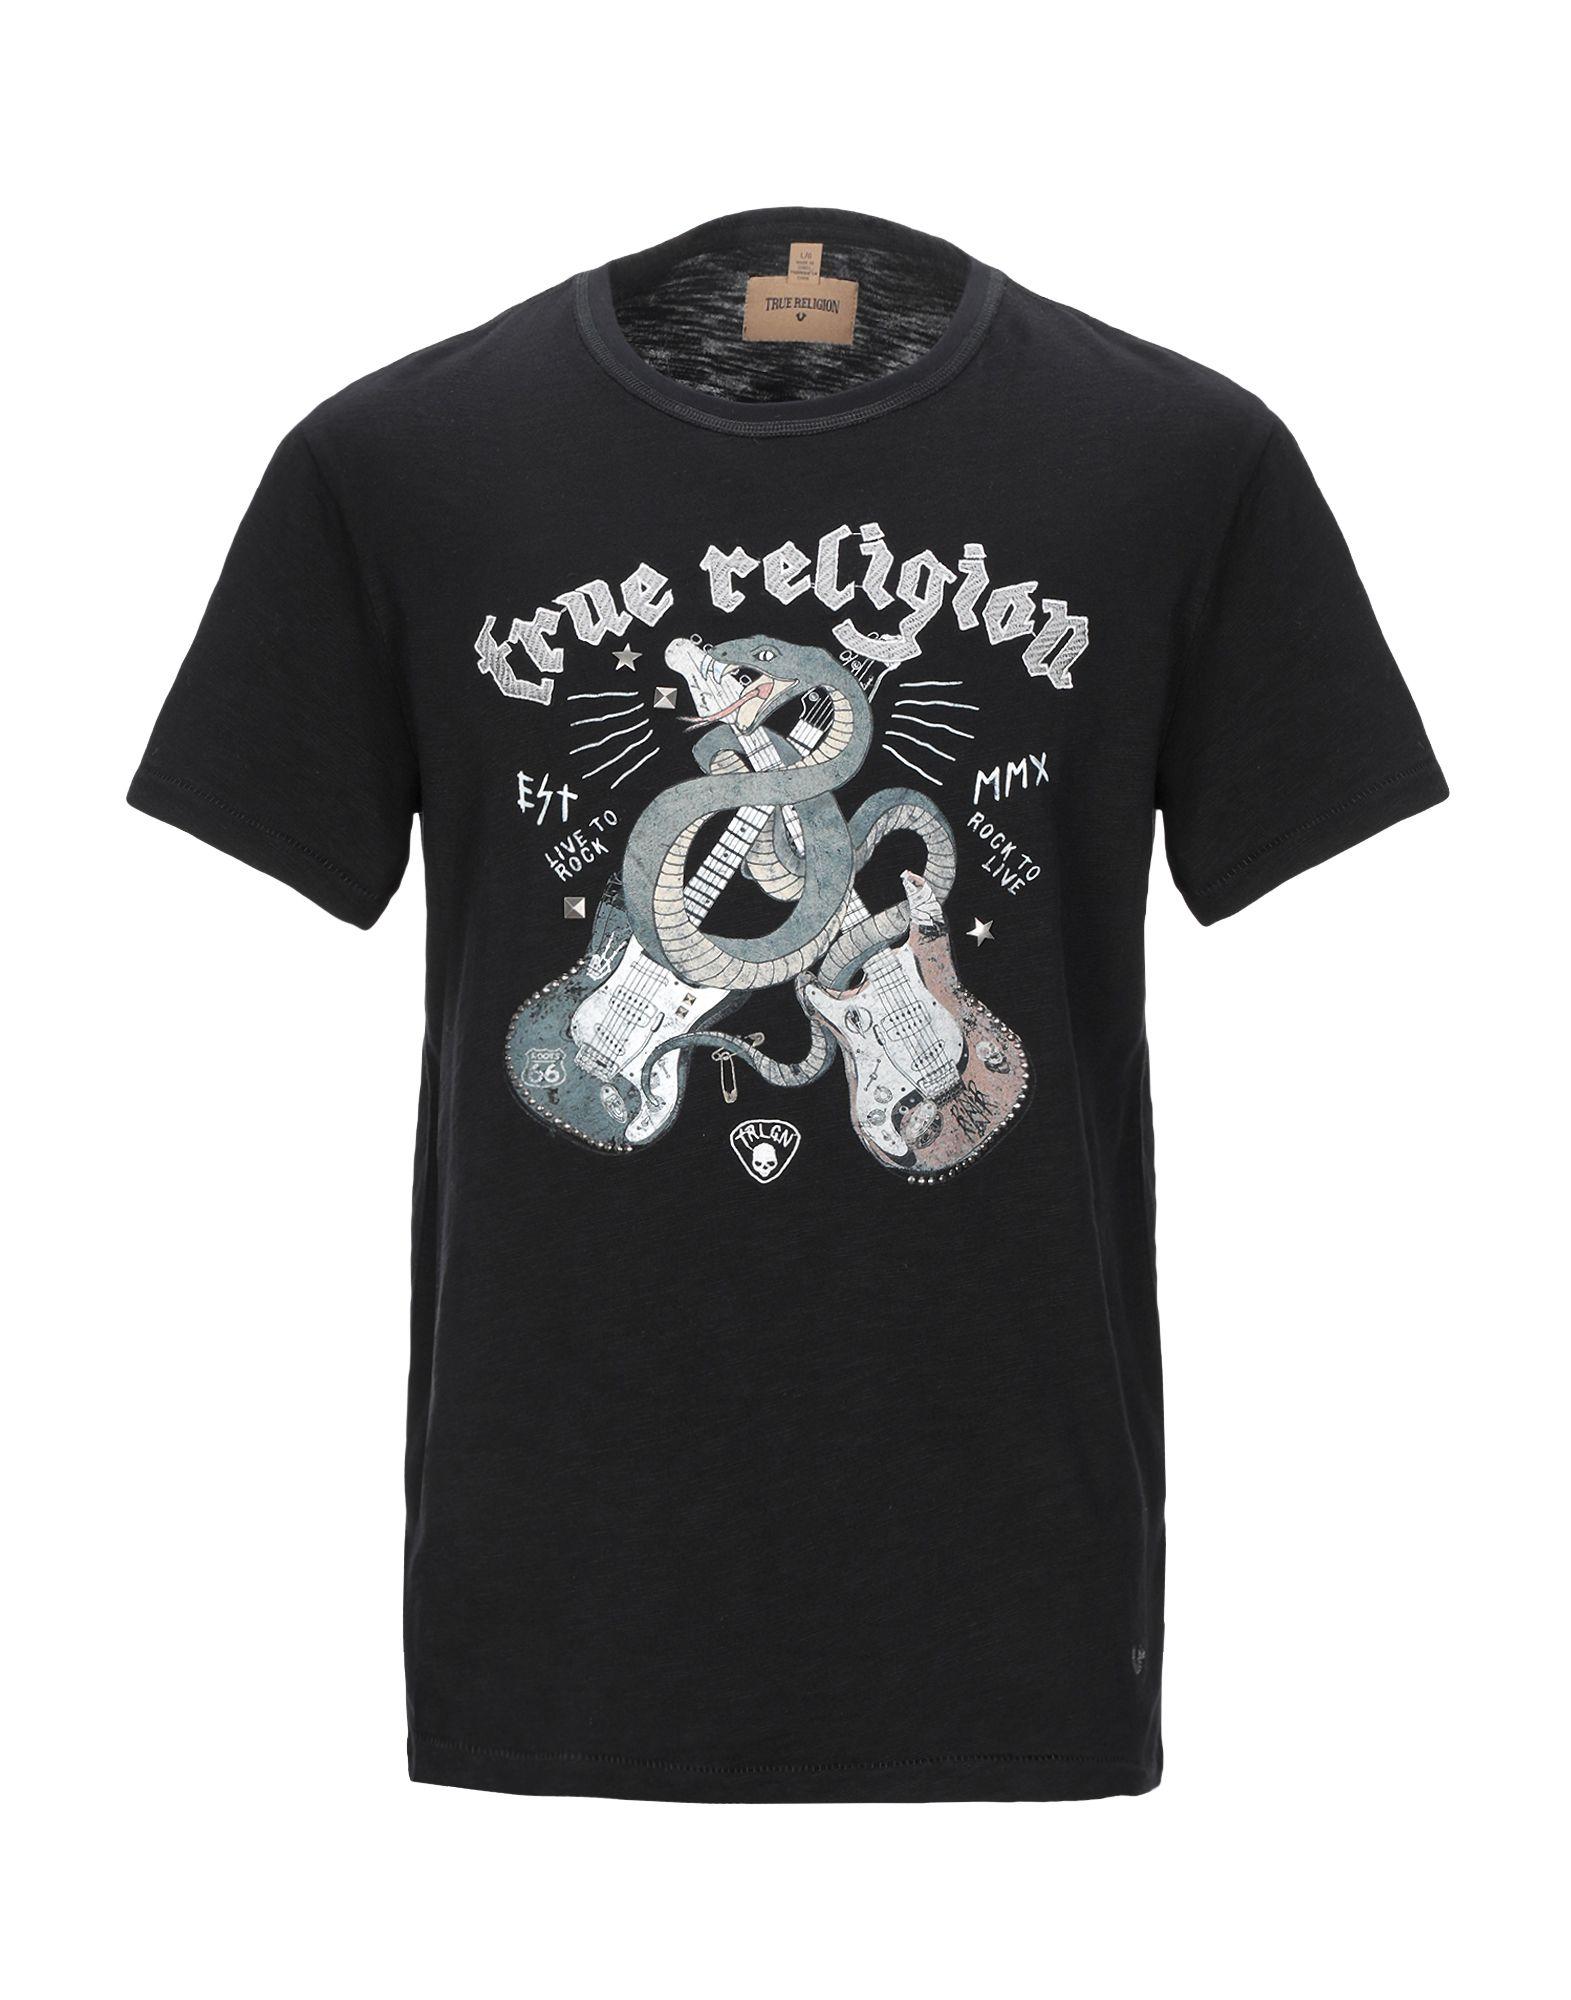 True Religion Cotton T-shirt in Black for Men - Lyst